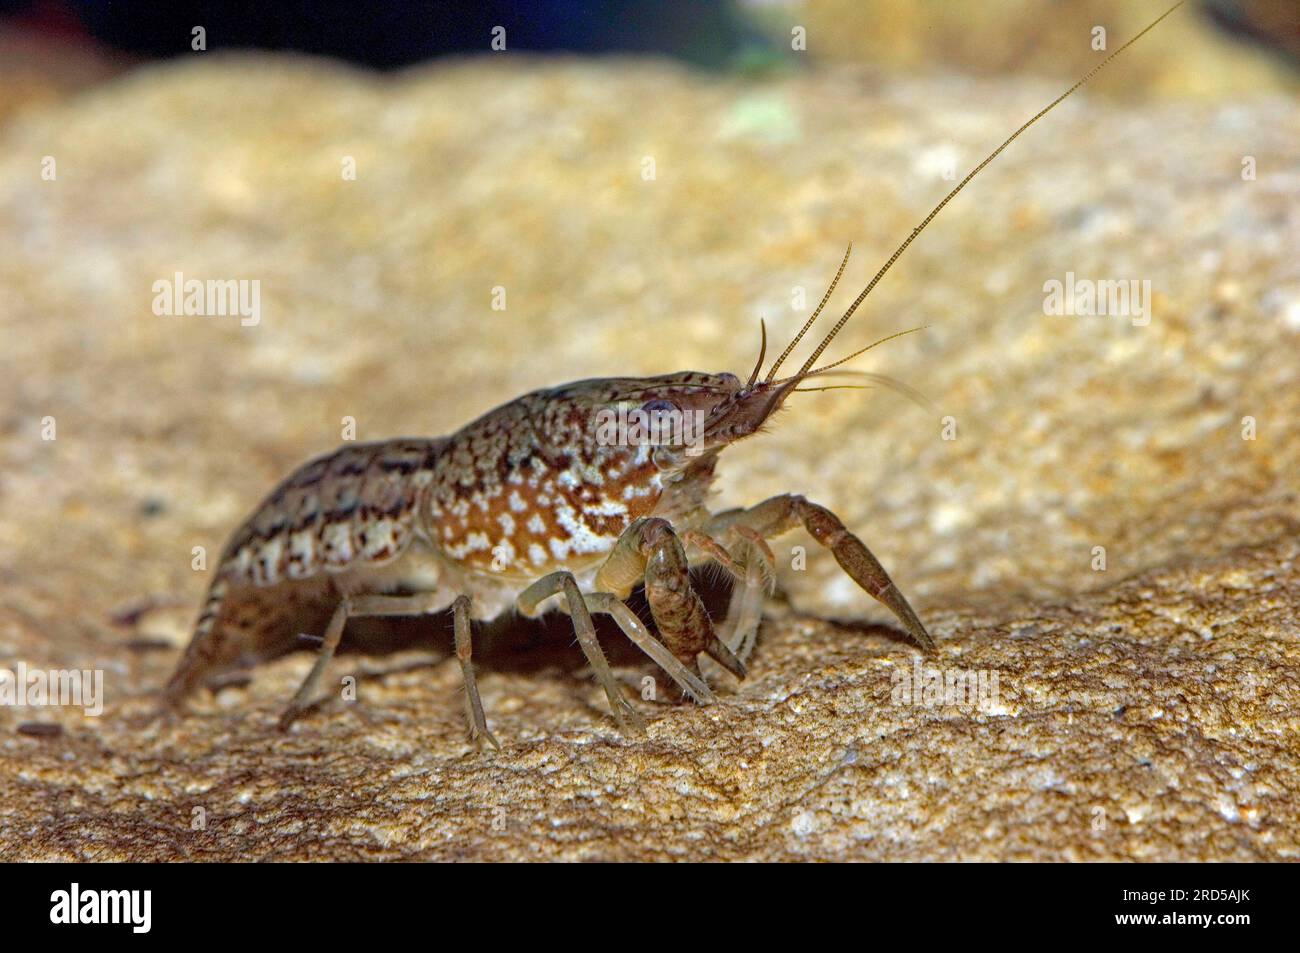 Marbled crayfish (Procambarus) Stock Photo